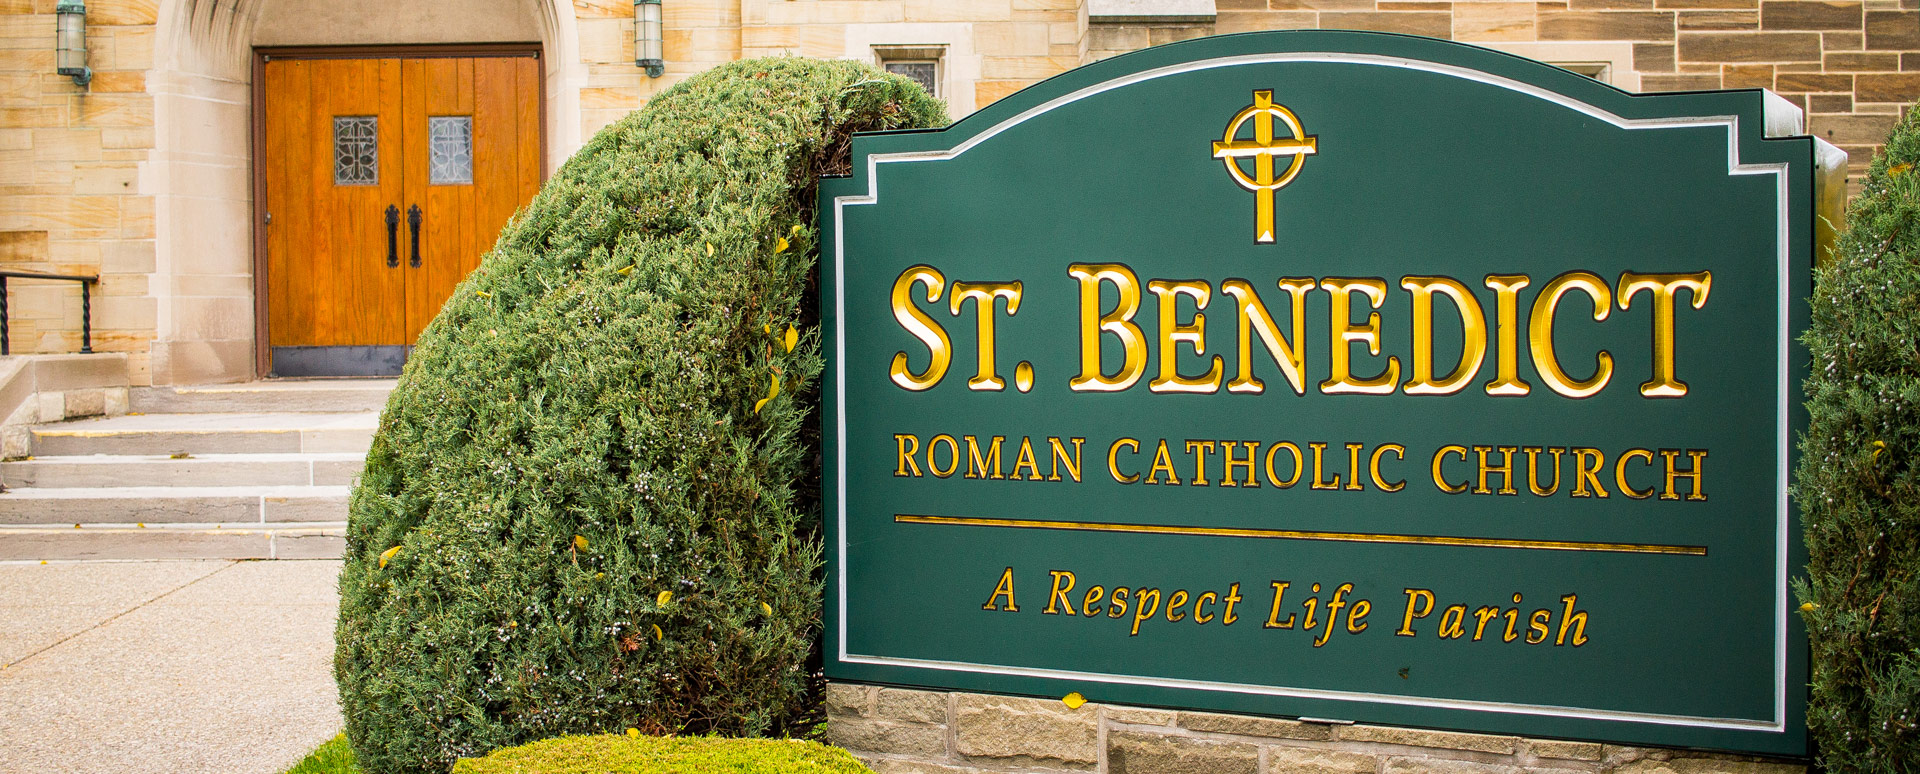 front door sign to Roman Catholic Church, St. Benedict